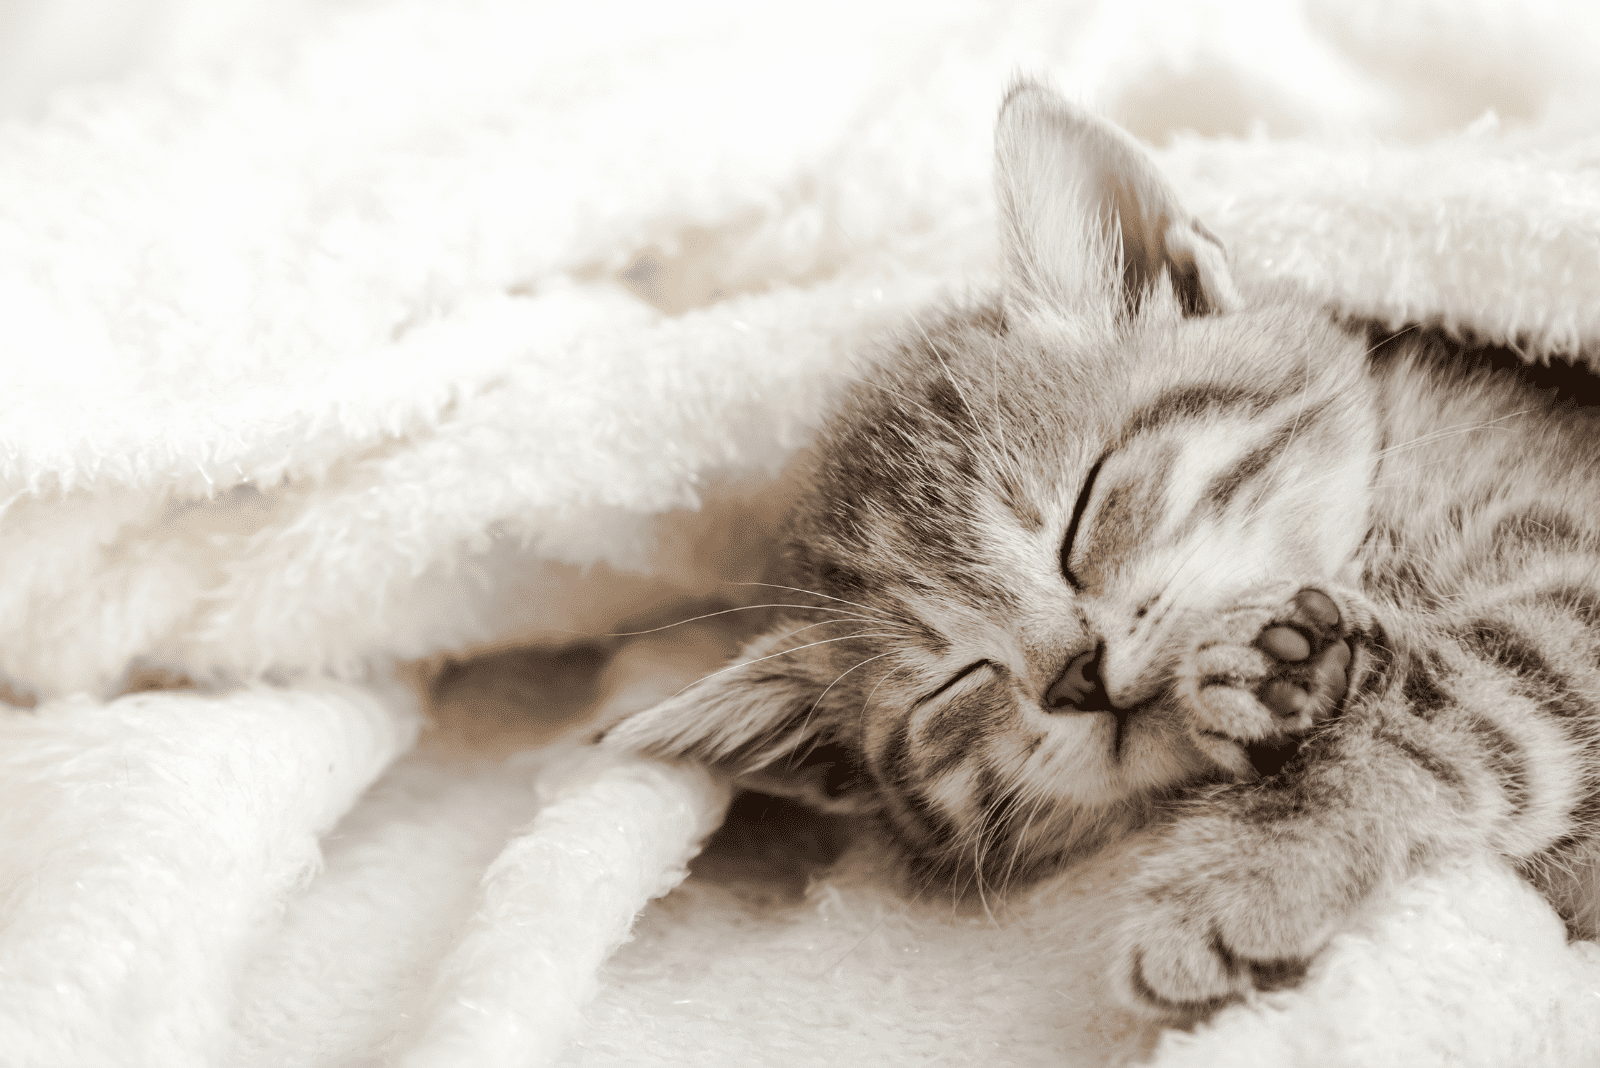 the kitten is sleeping wrapped in a blanket